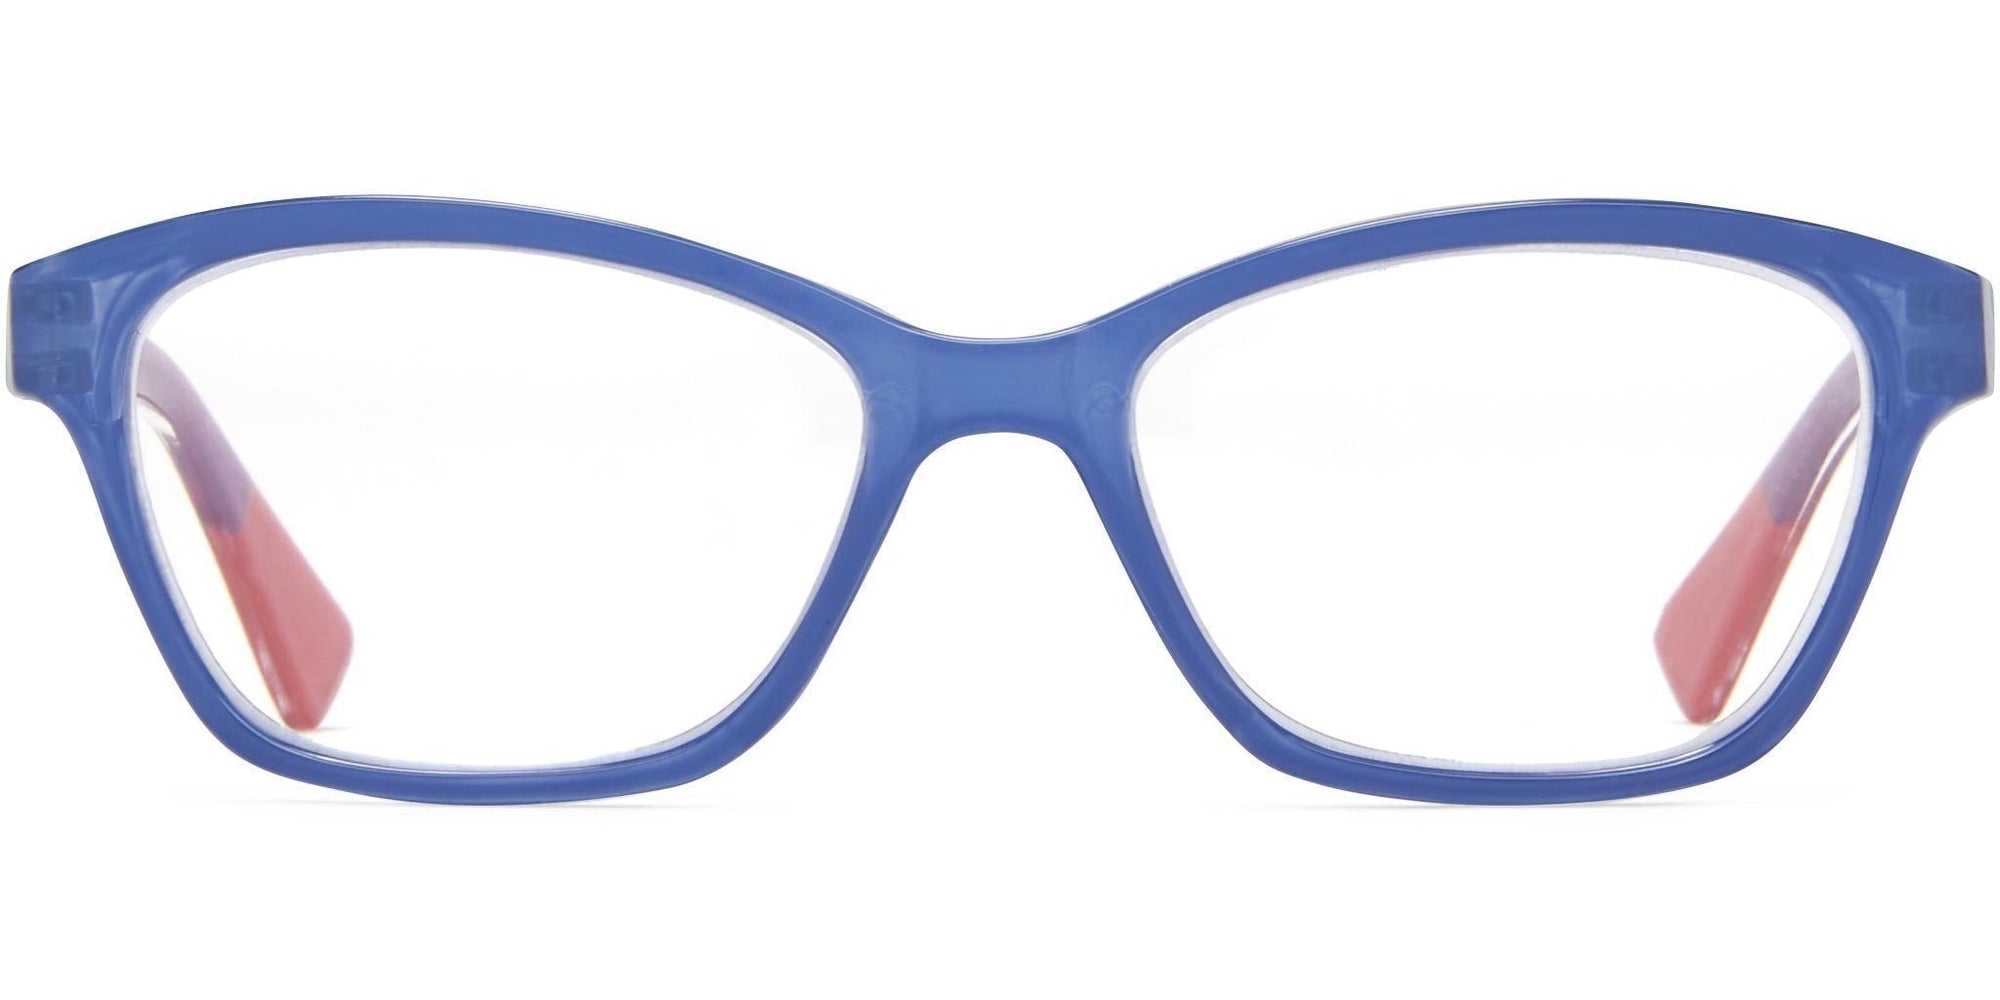 Palma - Blue/Green/Purple / 1.25 - Reading Glasses